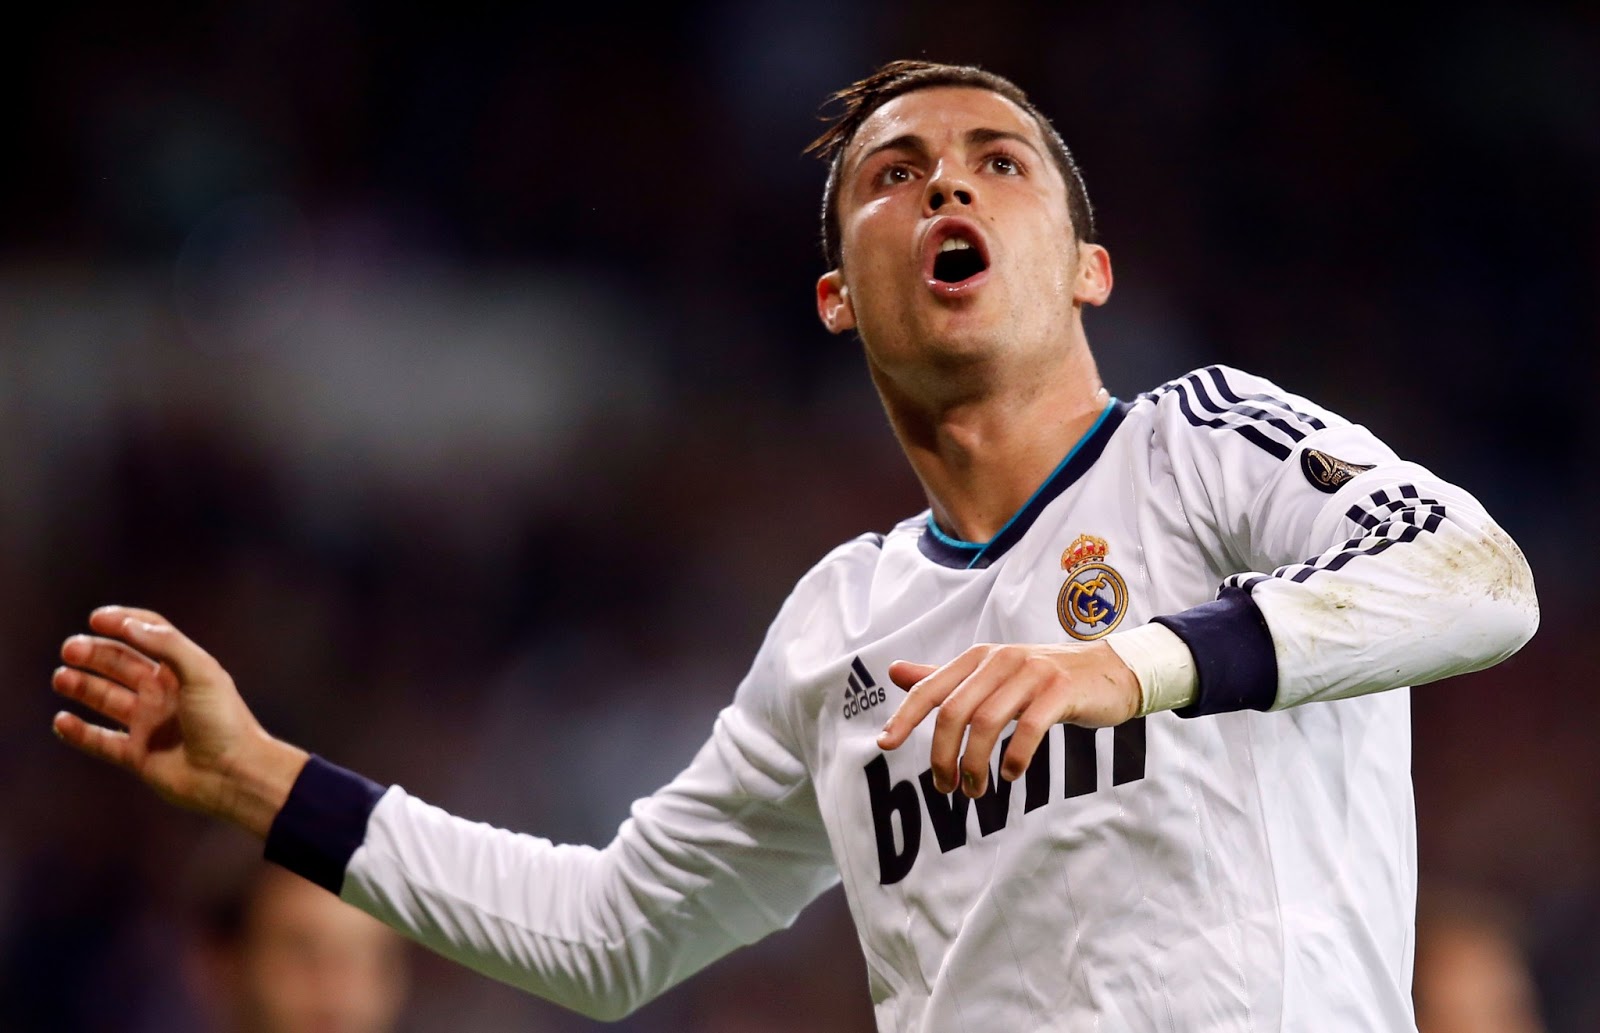 https://blogger.googleusercontent.com/img/b/R29vZ2xl/AVvXsEjUgG-XN7Lh9e-YCSNSjgeF5MPF9QwWscmE4wDh6JhVIdHDac1GxdgBhYkvzbv9GmWbxVOVs8fM1YMLtZsuoTakC5b1LGsuJdCjRugjtMNIH2jNOlpJpZgpQ7d9jTr6-AV6RcnoW1VC01eG/s1600/Cristiano-Ronaldo-2013-HD-Wallpaper-Picture-Real-Madrid-2.jpg